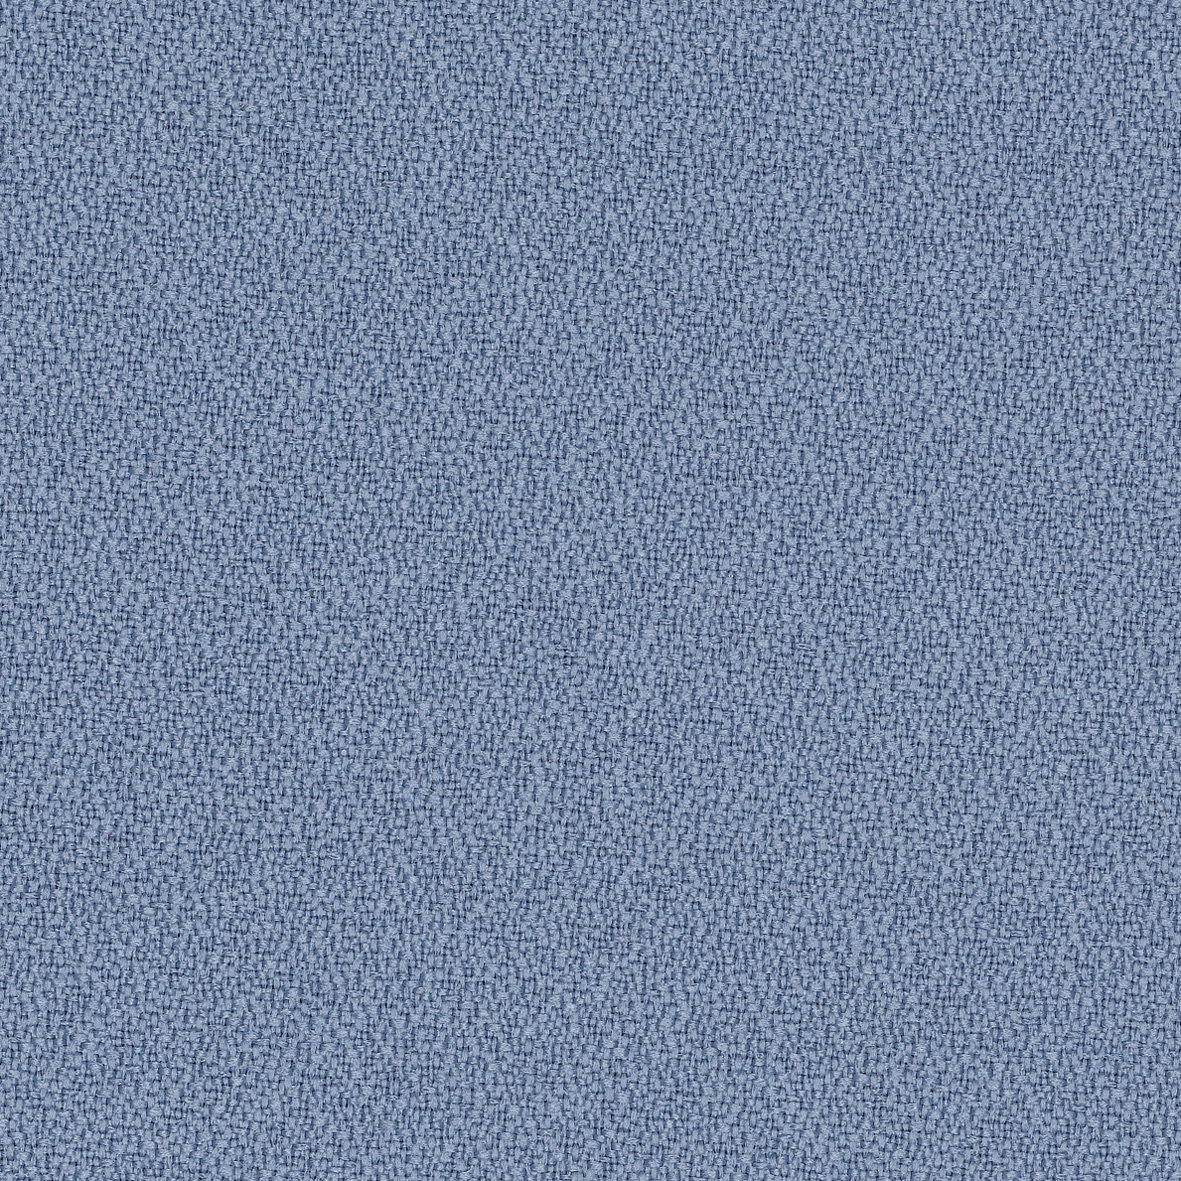 Softline bordskærmvæg blå B1600xH590 mm